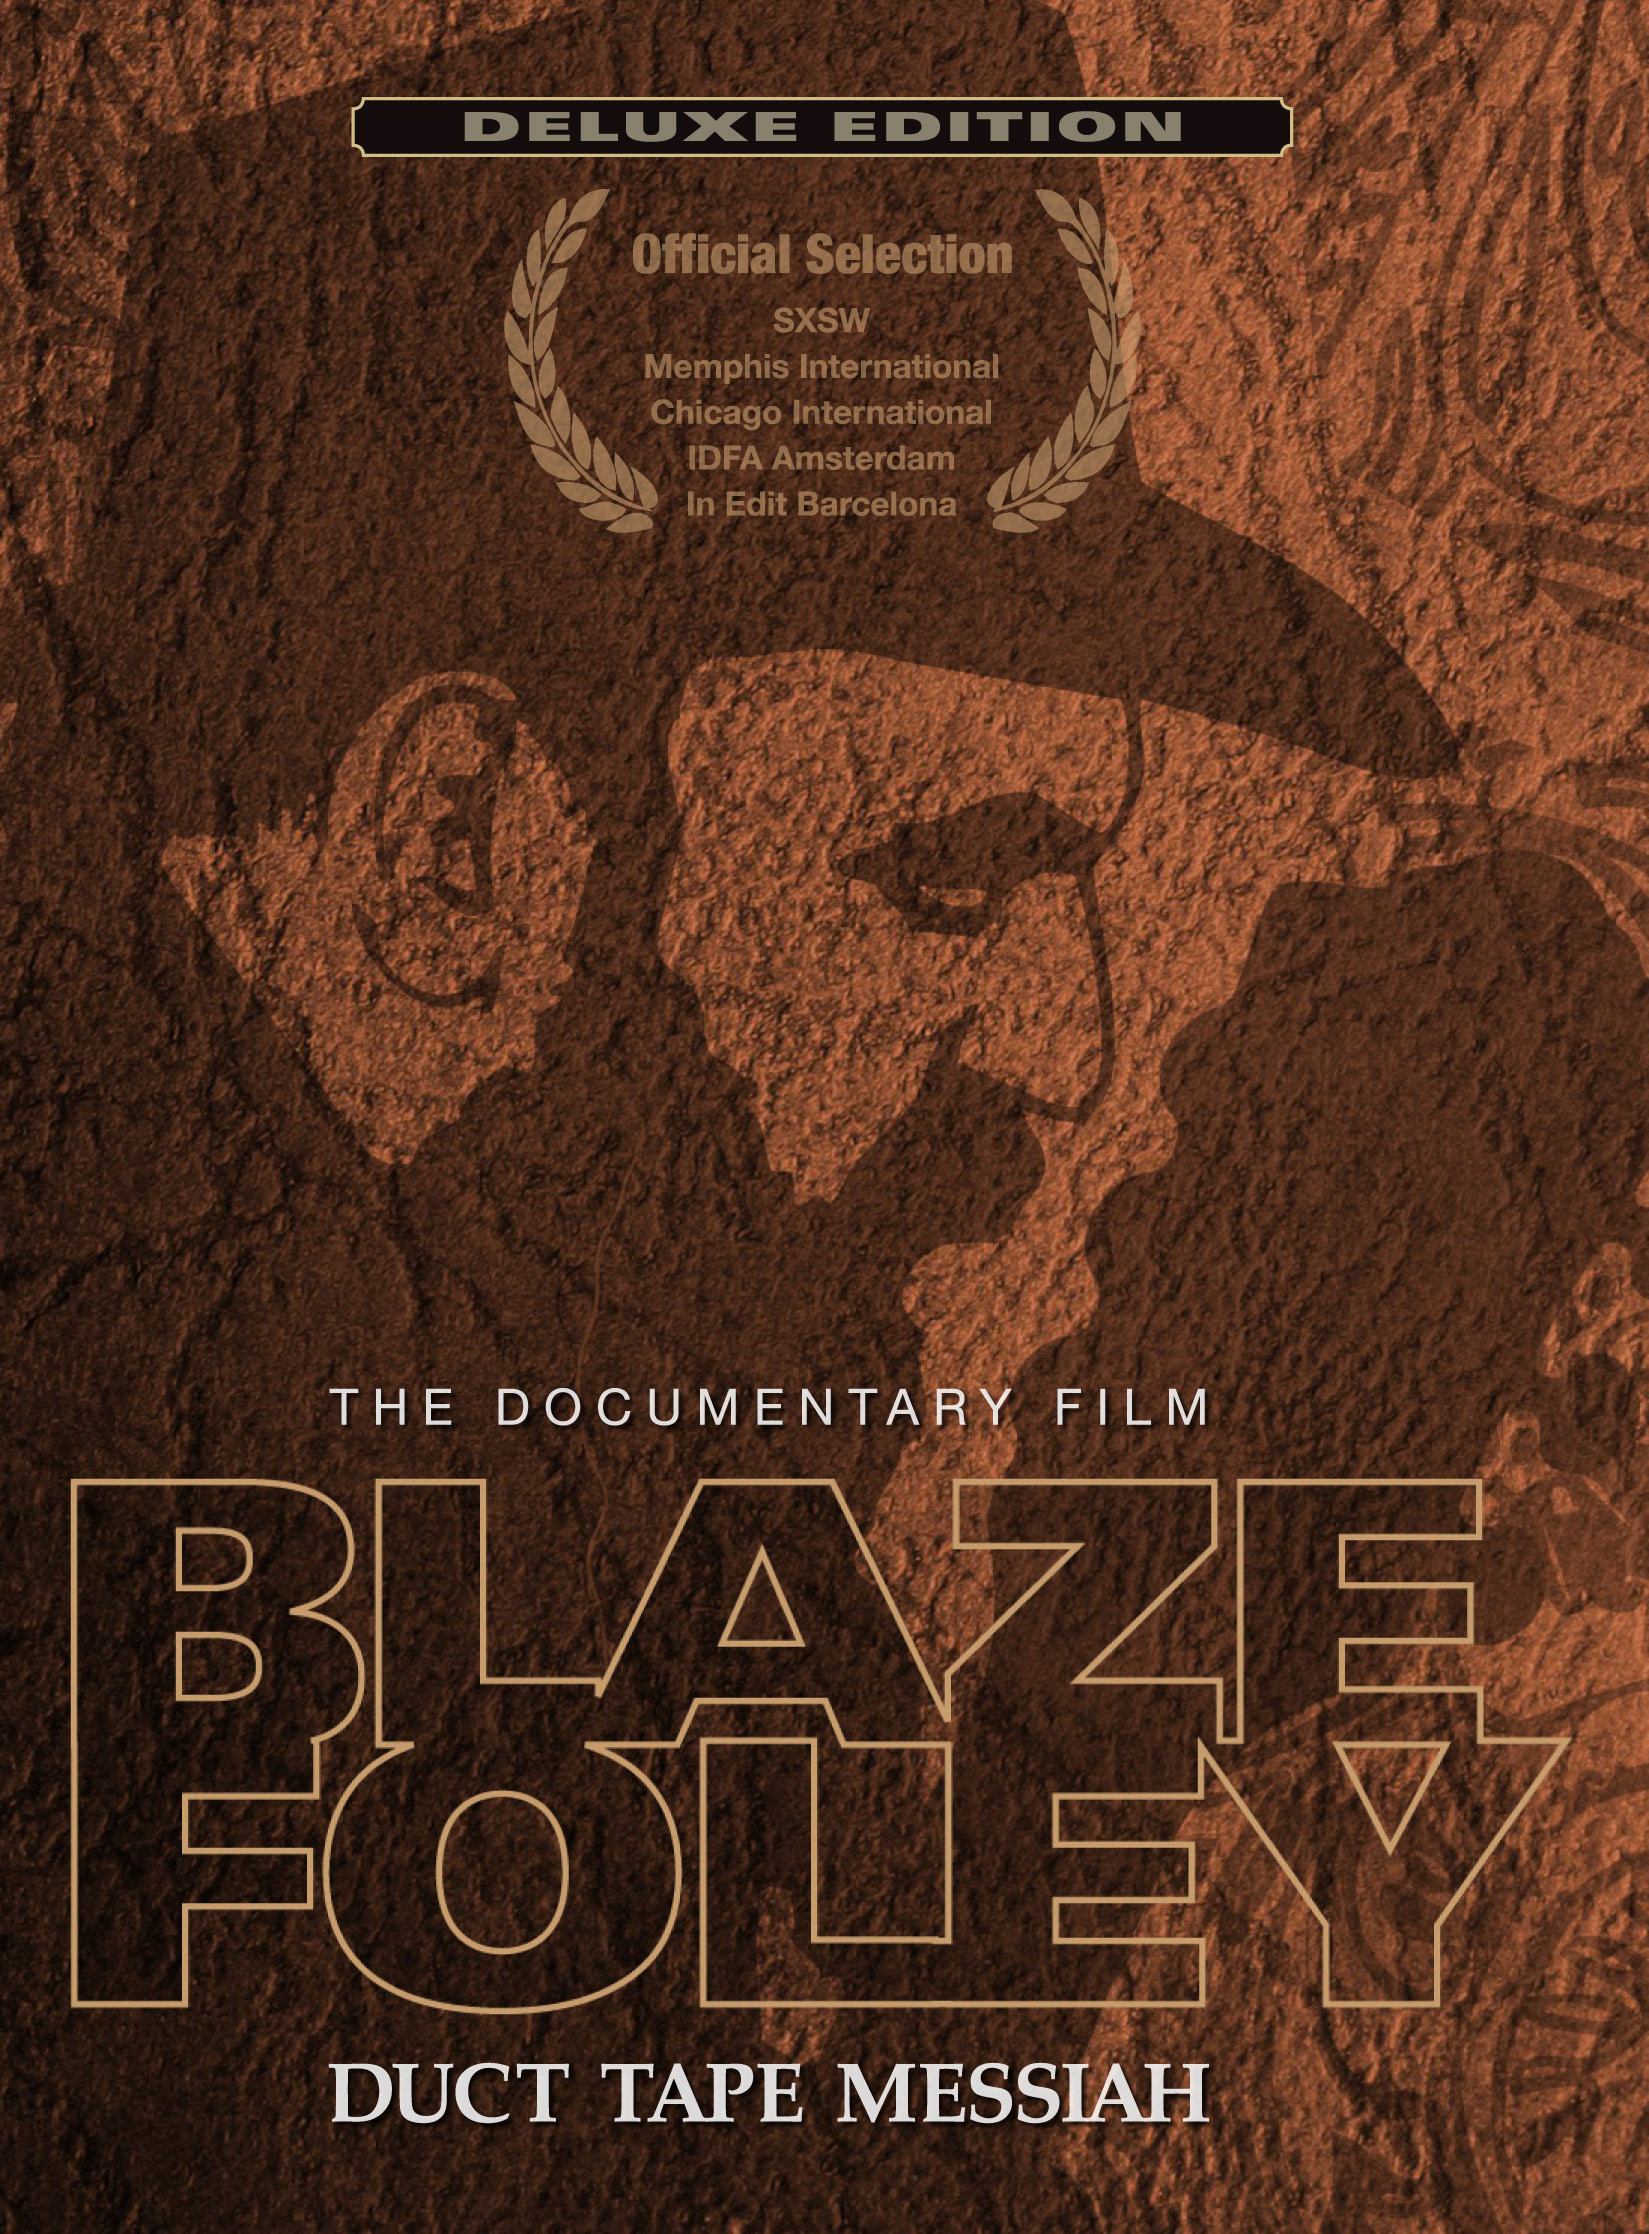 ¿Documentales de/sobre rock? - Página 8 Blaze_Foley_DVD